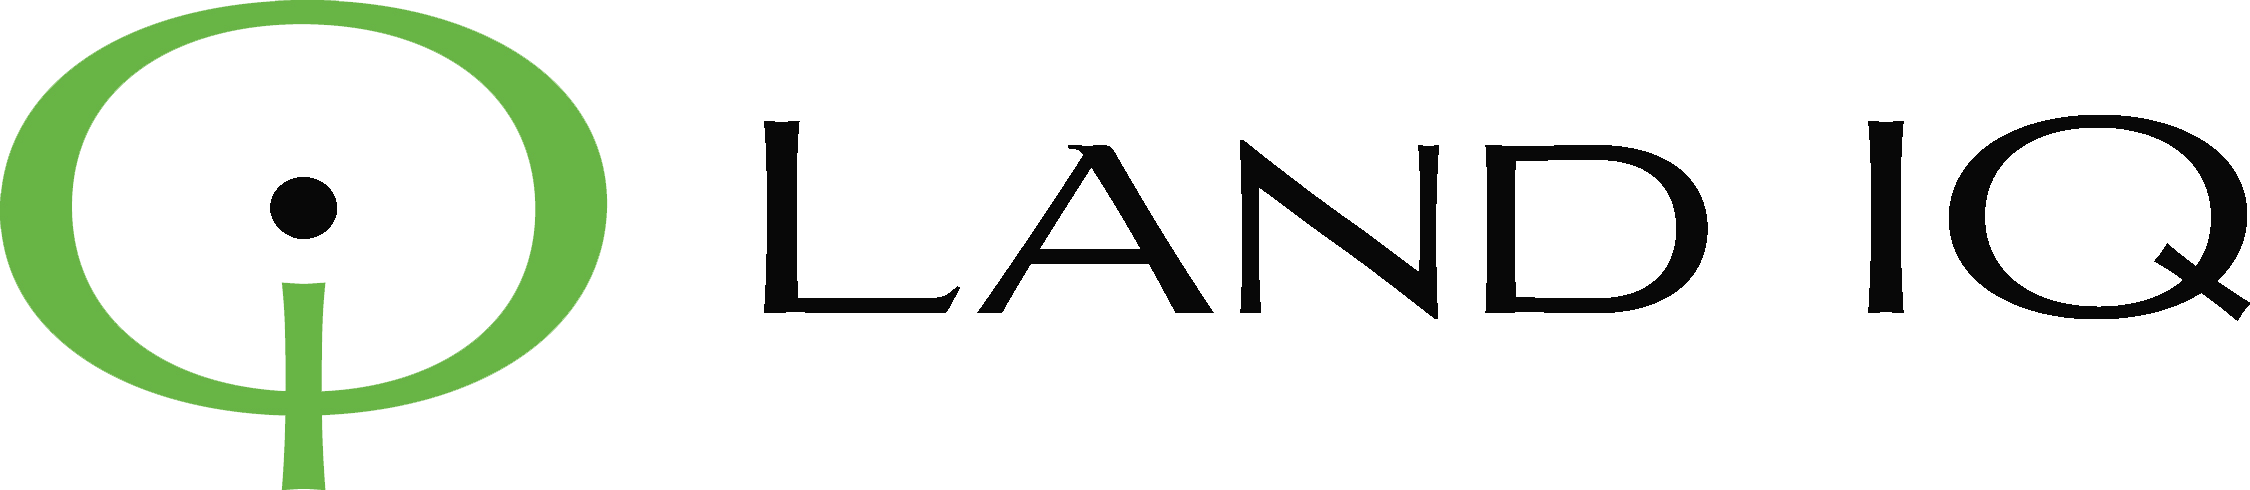 Land IQ Logo.png